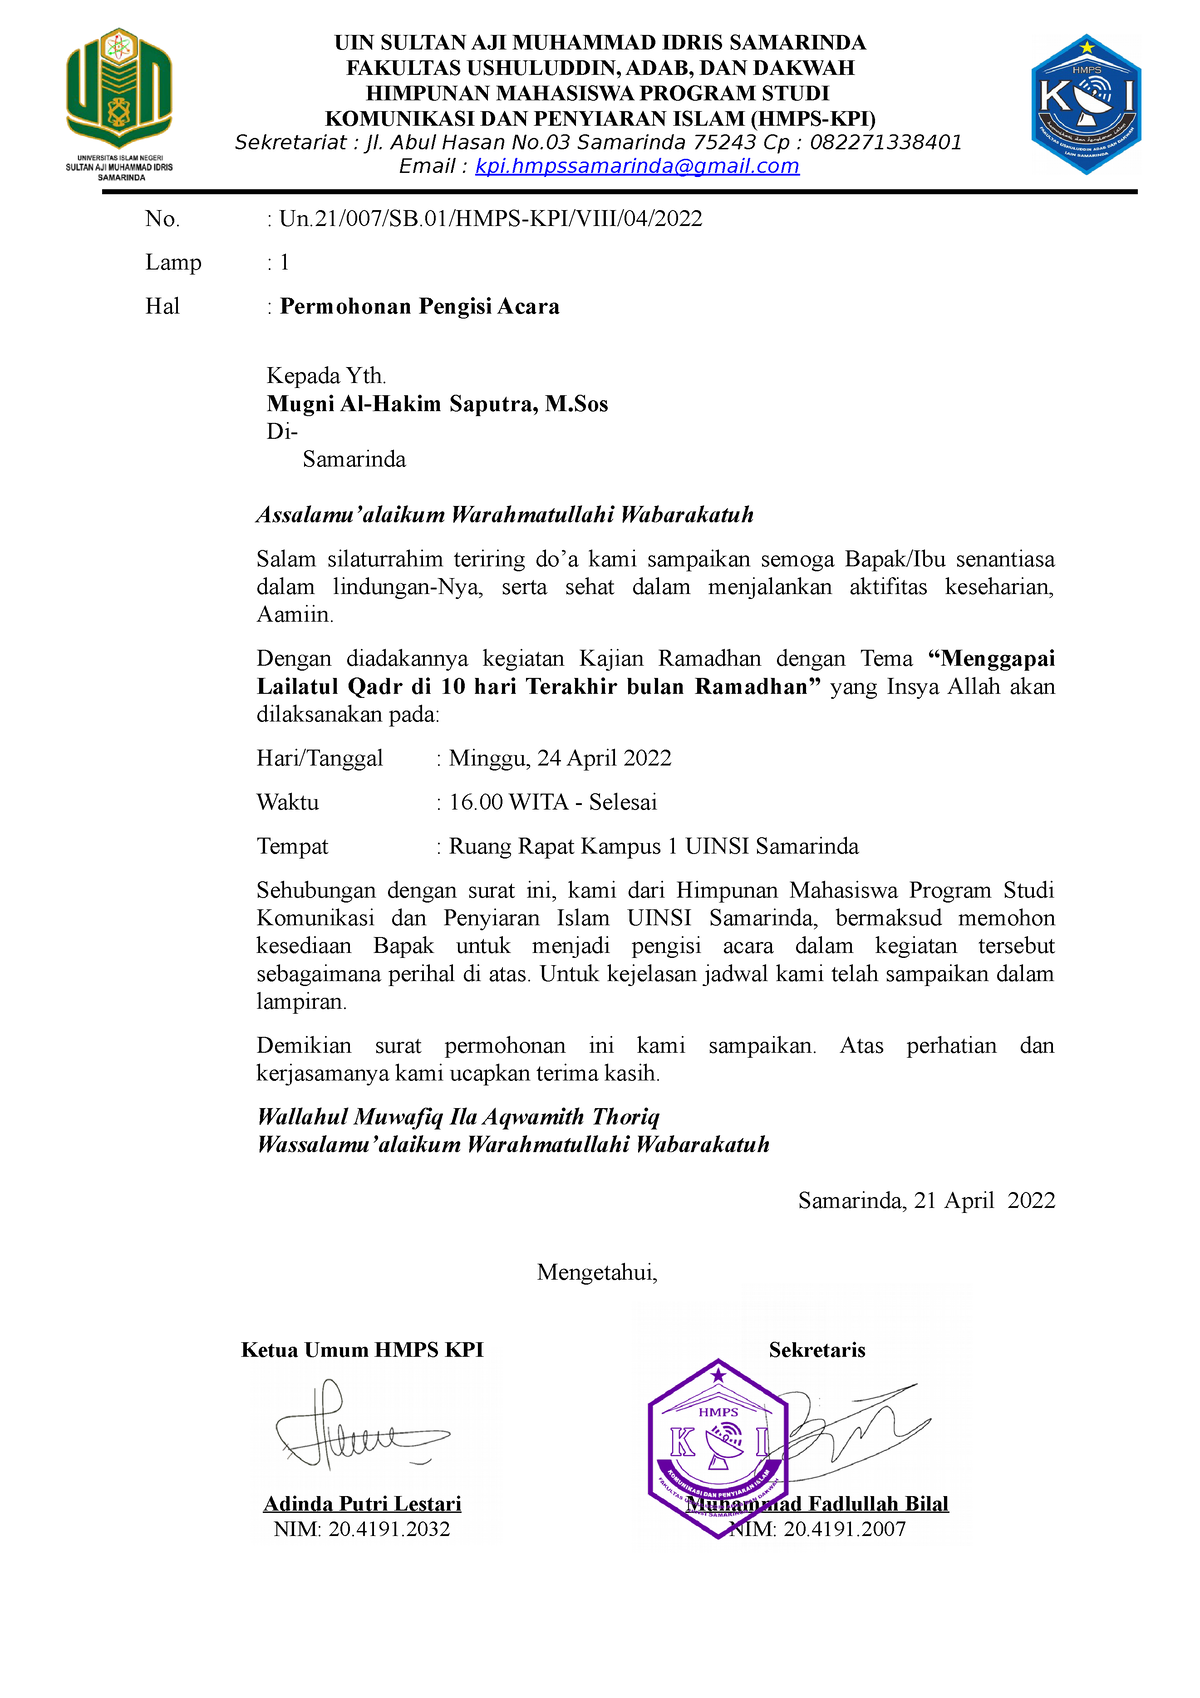 Surat Permohonan Pengisi Acara Uin Sultan Aji Muhammad Idris